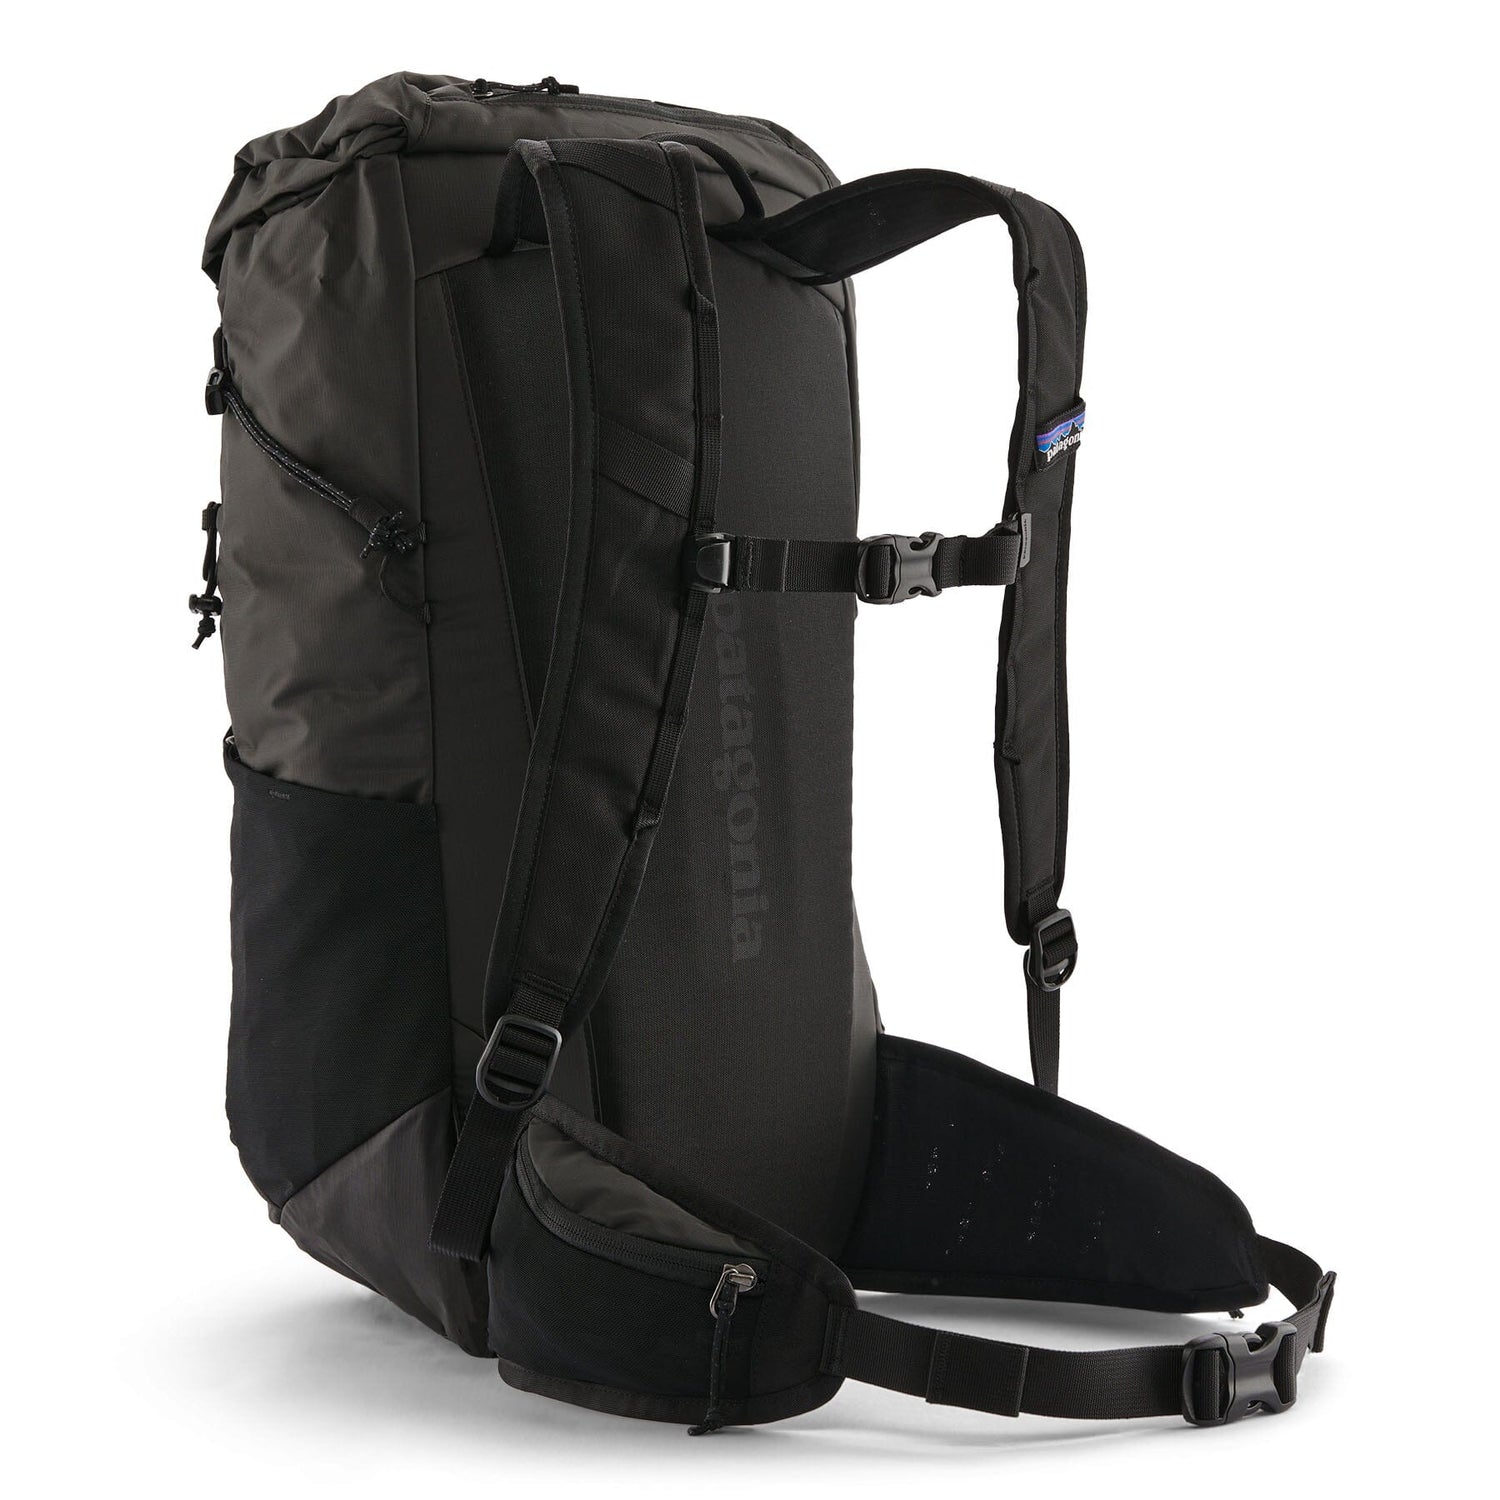 Patagonia Terravia Pack 28L - 100% Recycled Nylon Black Bags